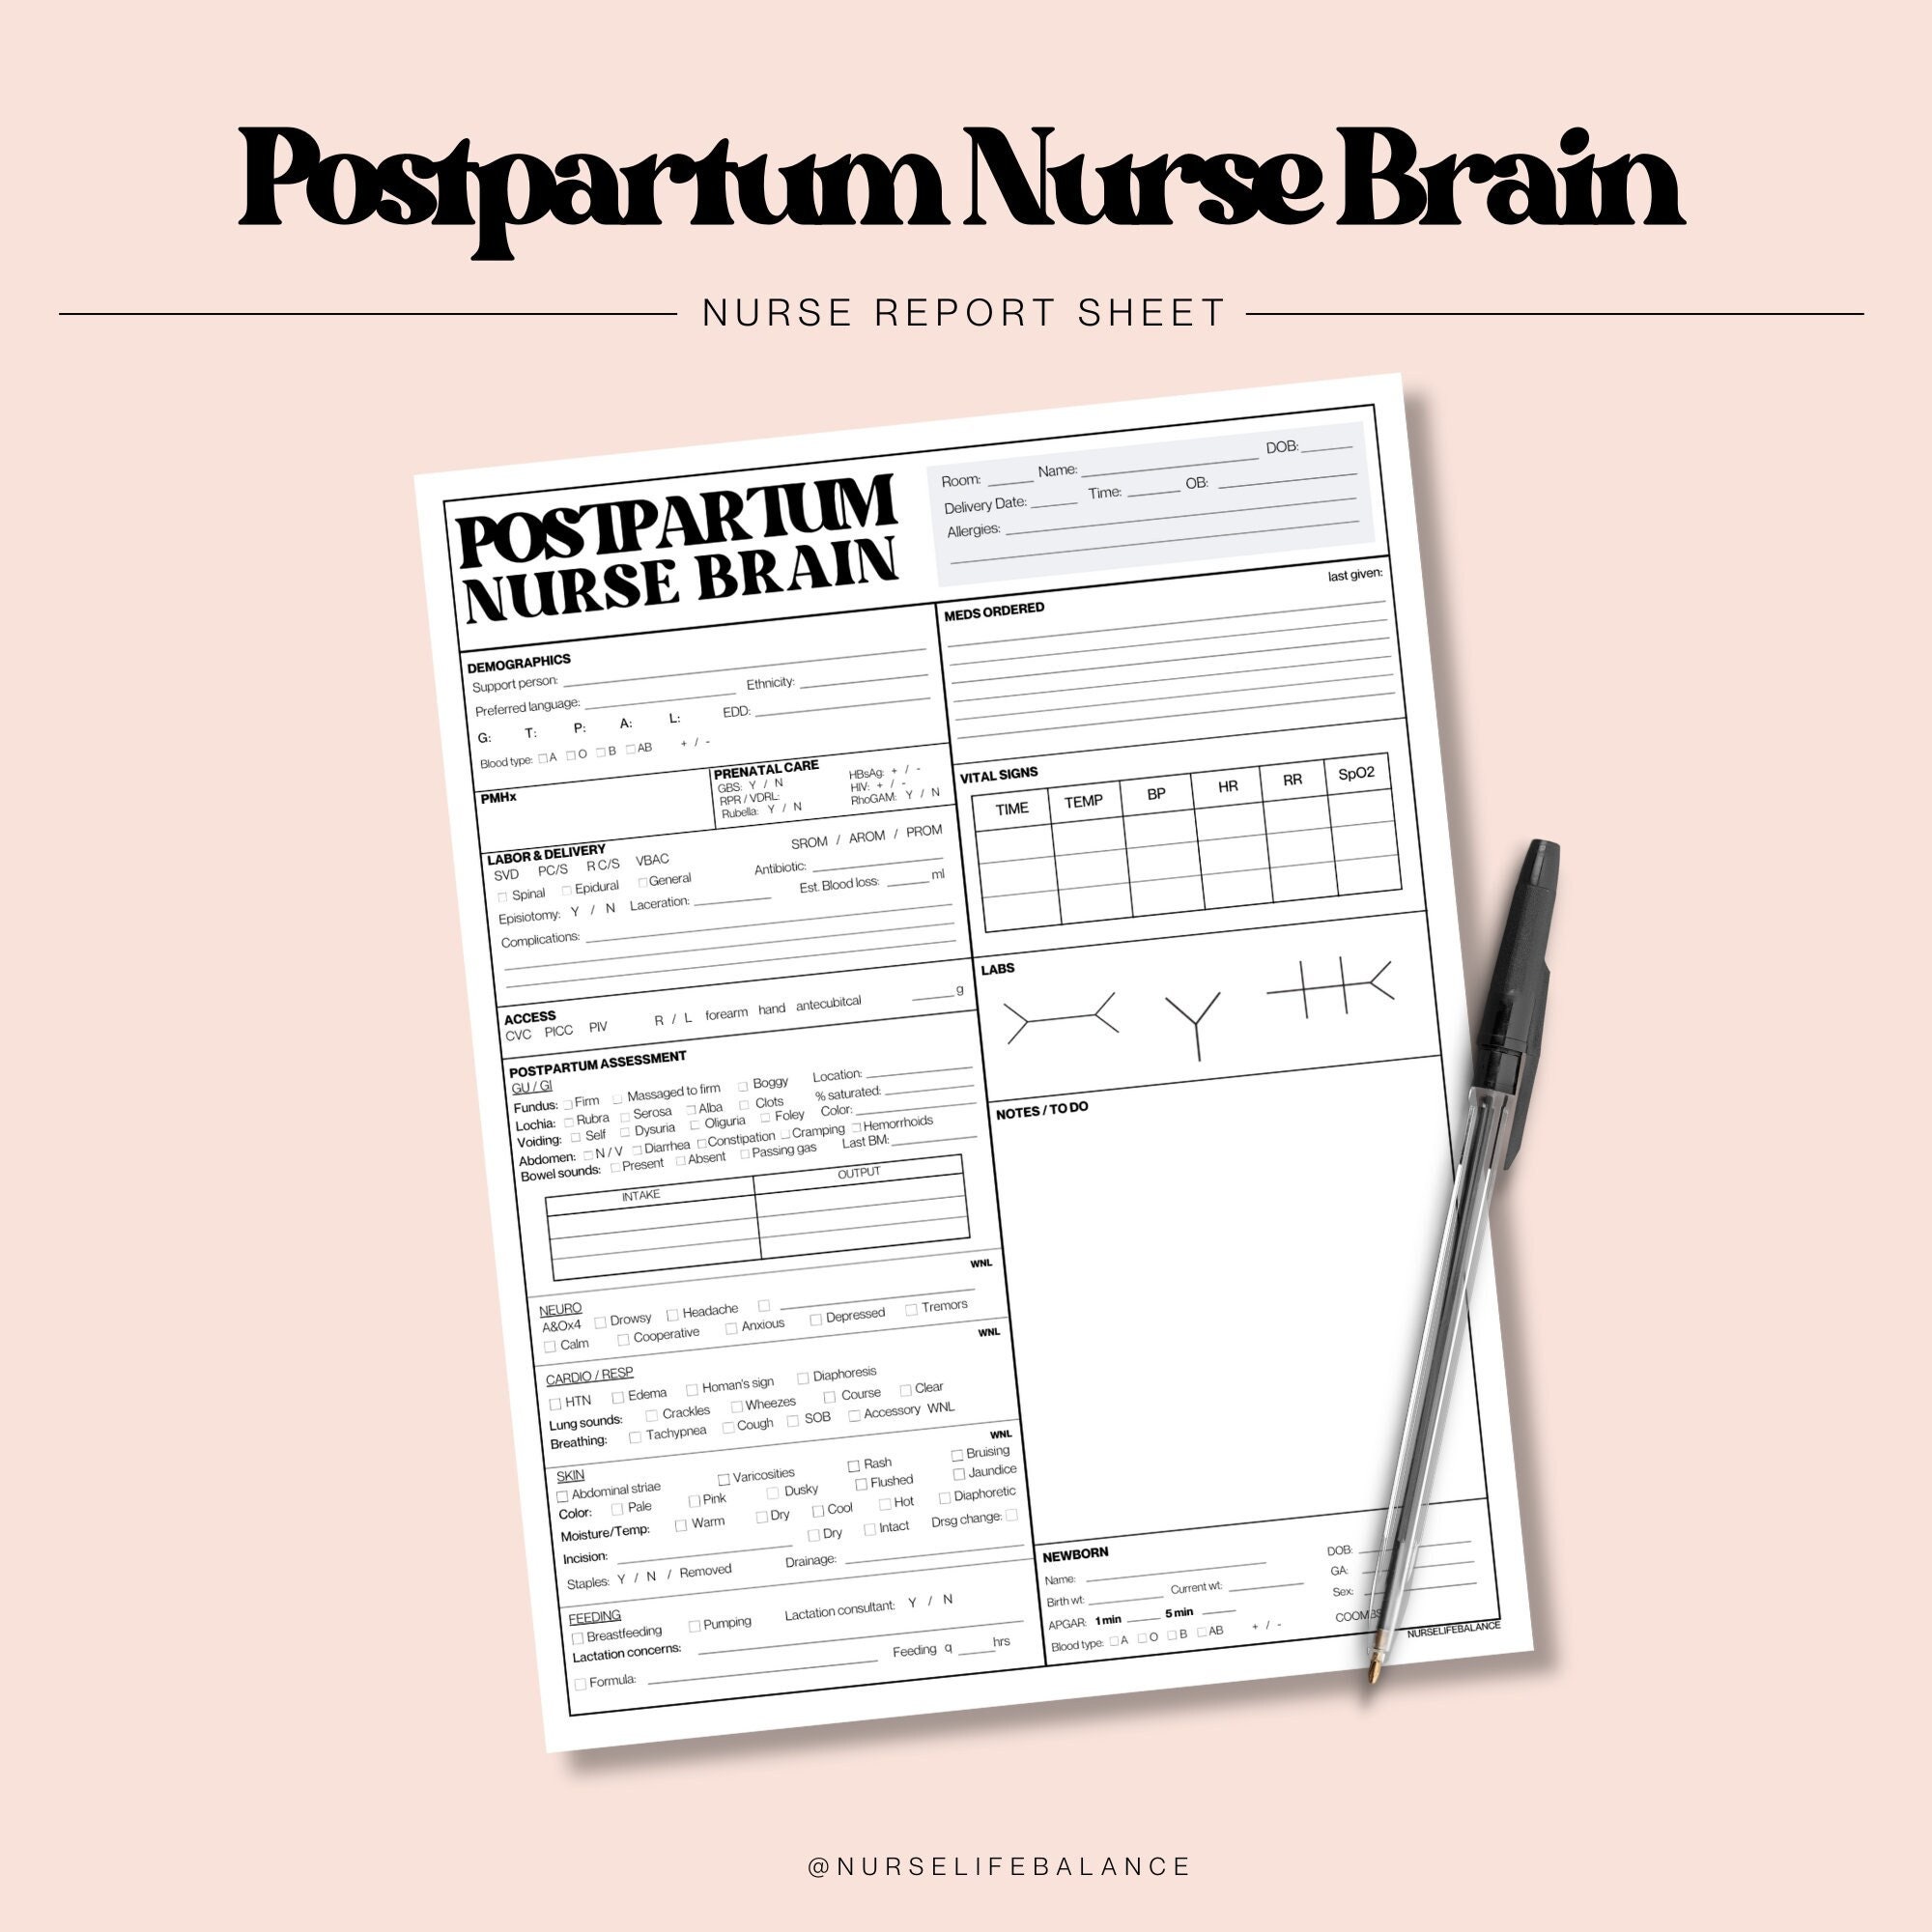 POSTPARTUM Nurse Brain 